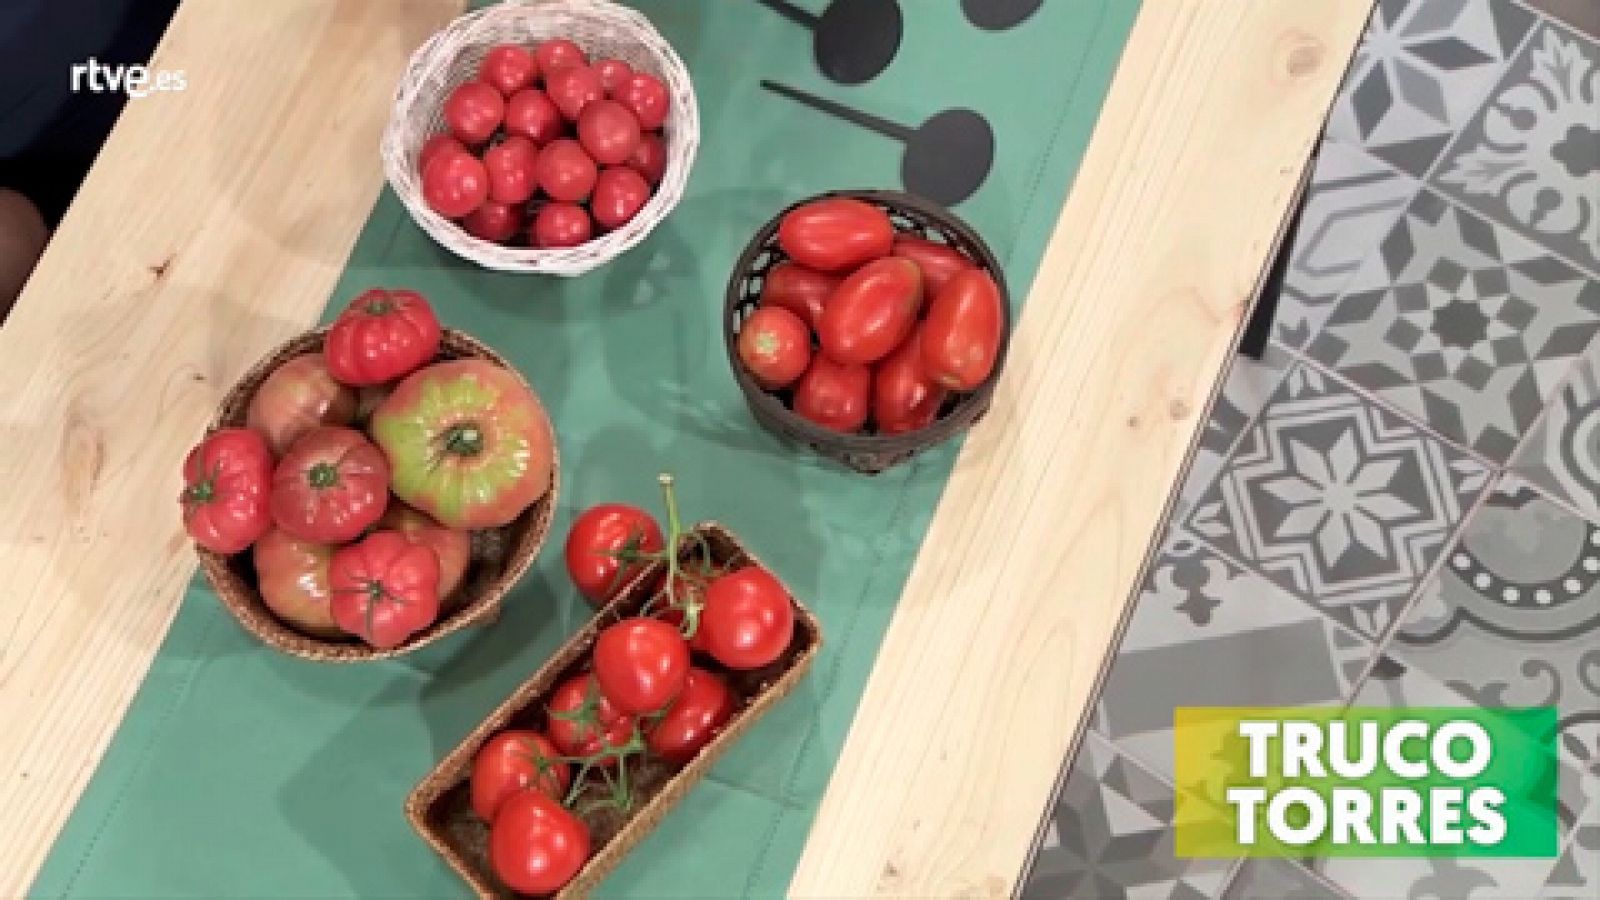 Trucos de cocina - Para qué sirve cada tipo de tomate